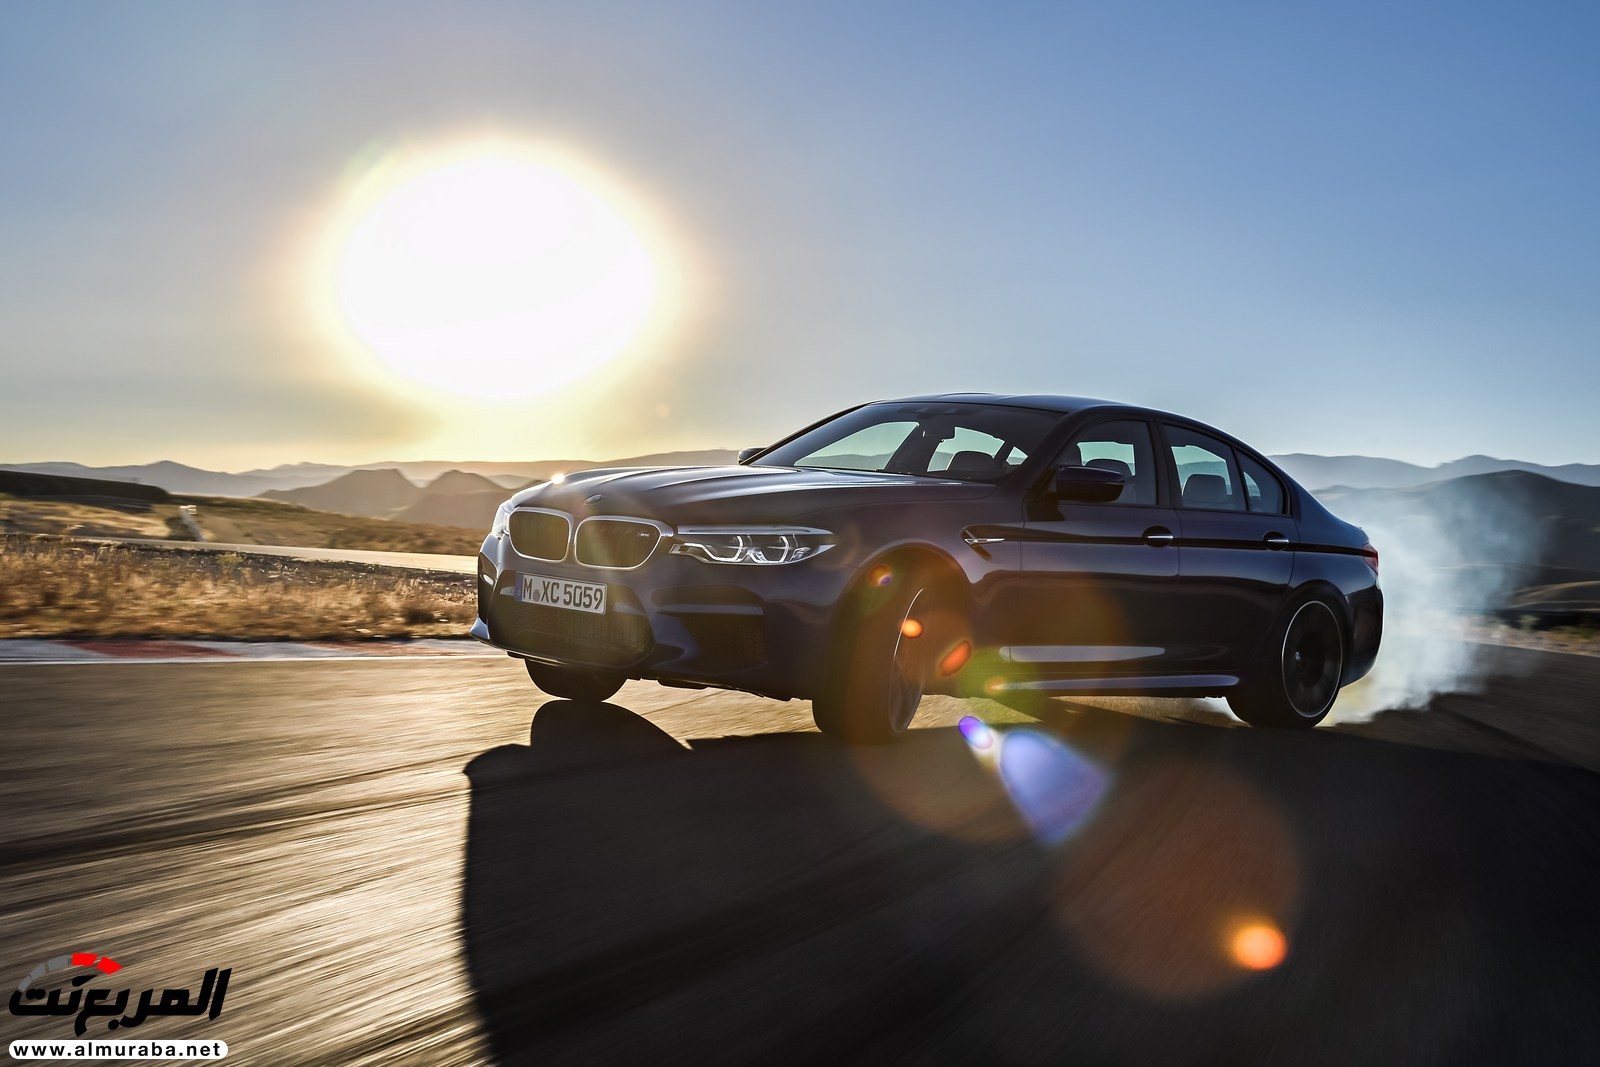 بي ام دبليو M5 2018 تكشف نفسها رسمياً بقوة ٦٠٠ حصان "صور ومواصفات" BMW 10